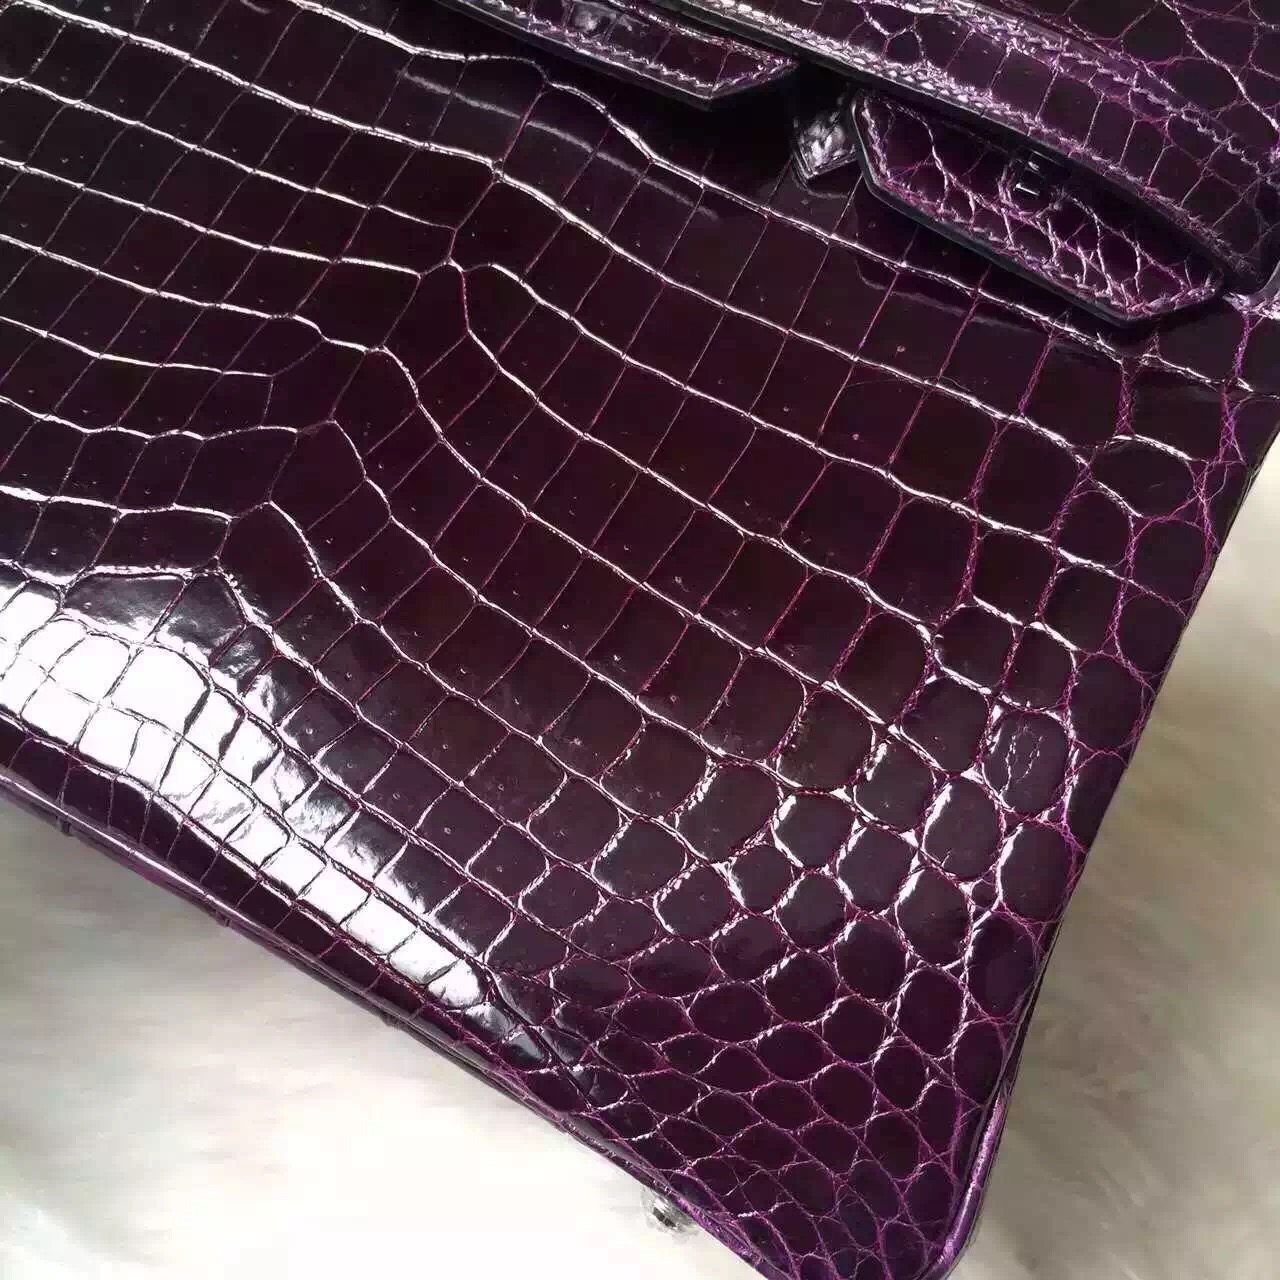 Hand Stitching Hermes Birkin 30cm Bag in 9G Violet Shiny Crocodile Leather